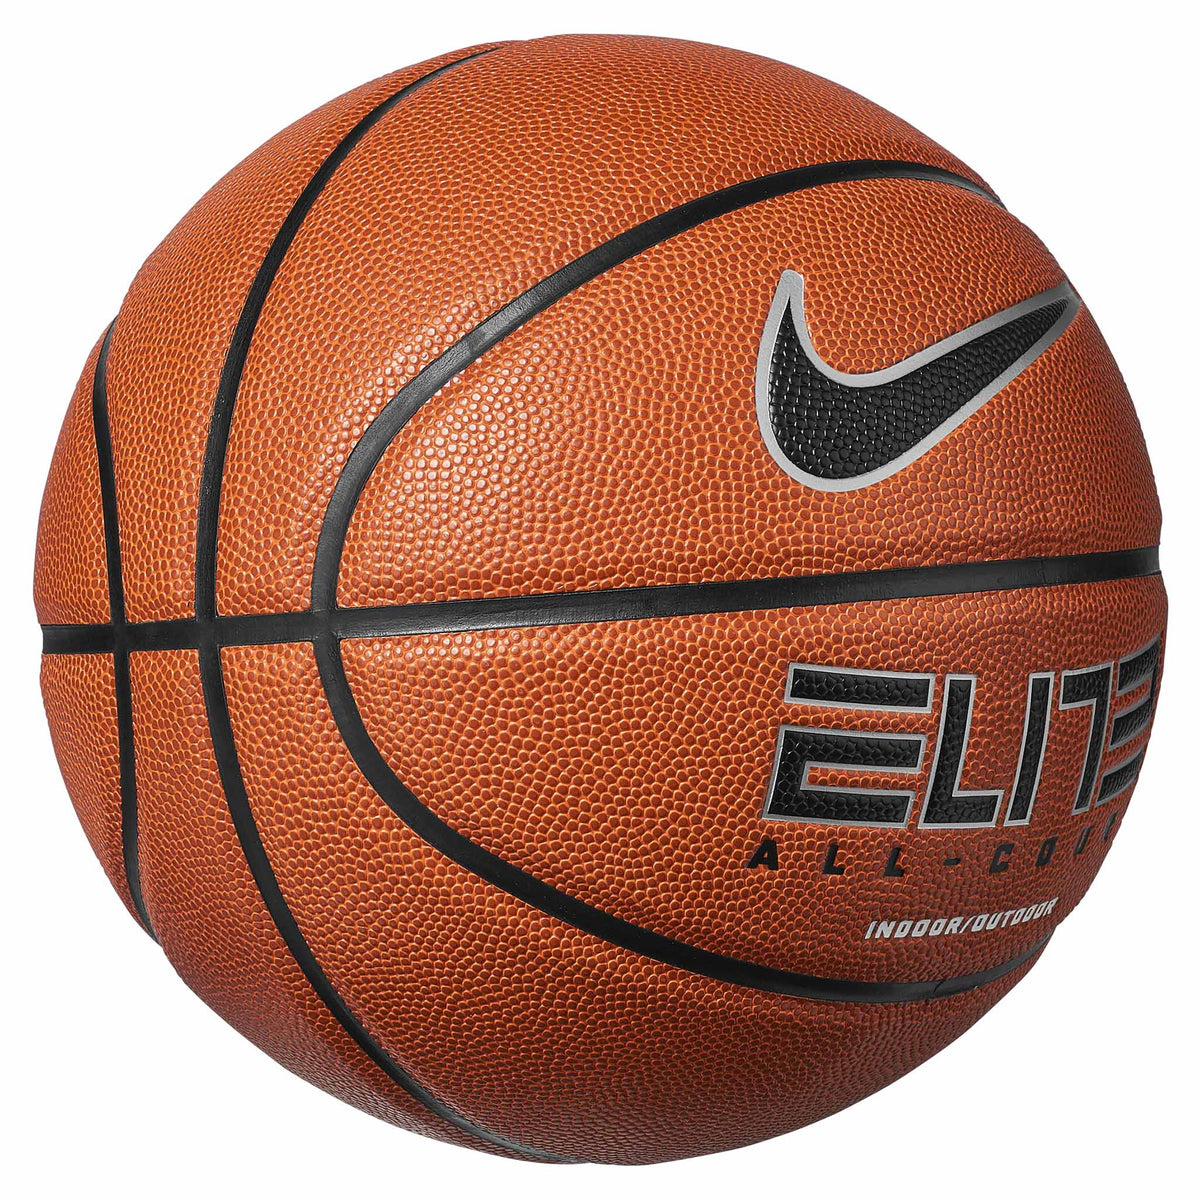 Nike Elite All-Court 8P 2.0 ballon de basketball - Amber / Black - angle